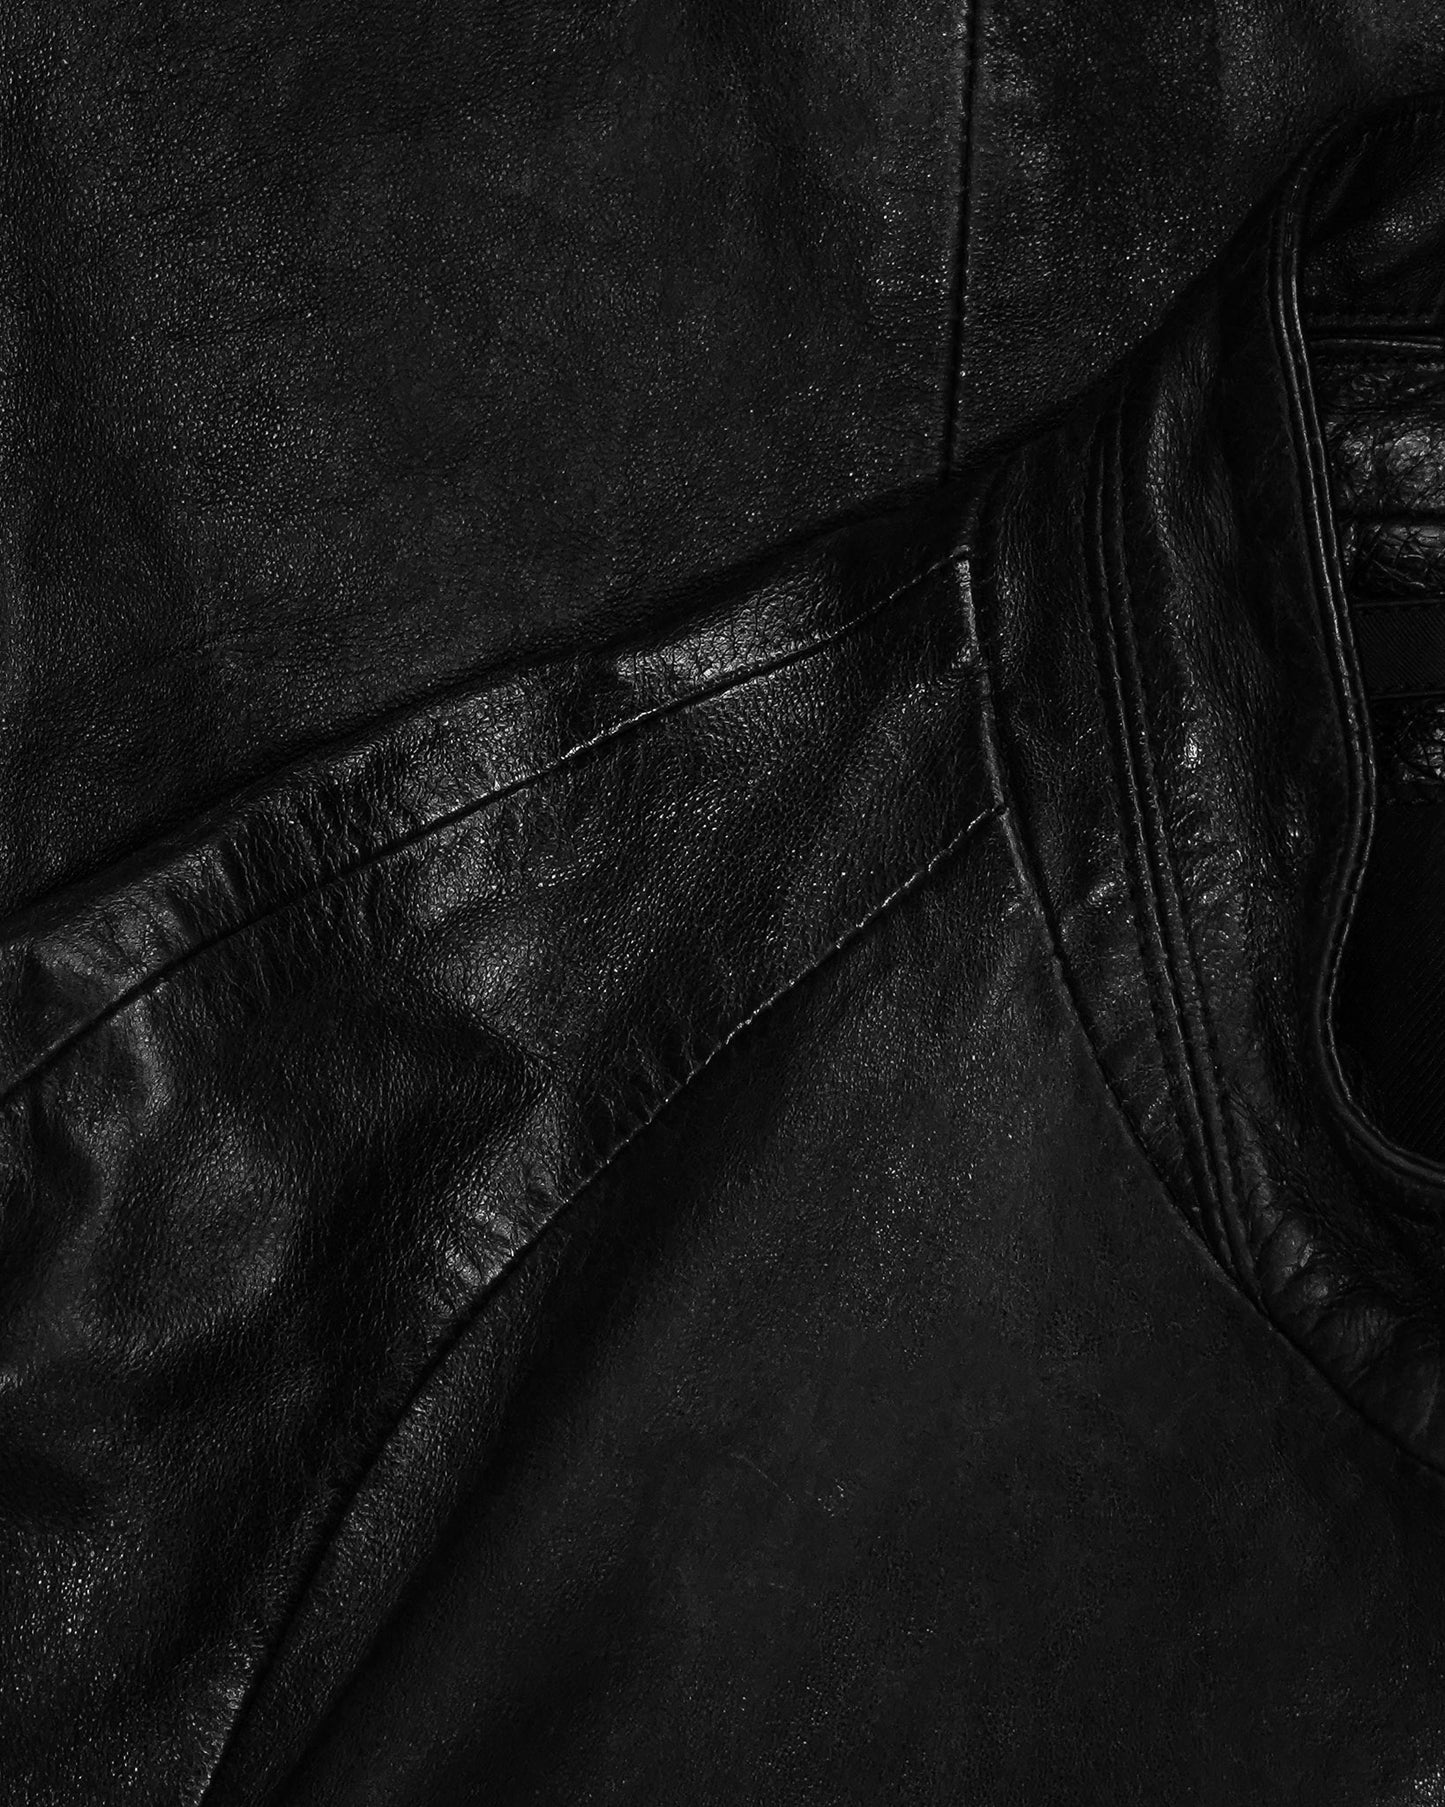 Julius Lamb Leather Jacket - SS13 "Vandalism"